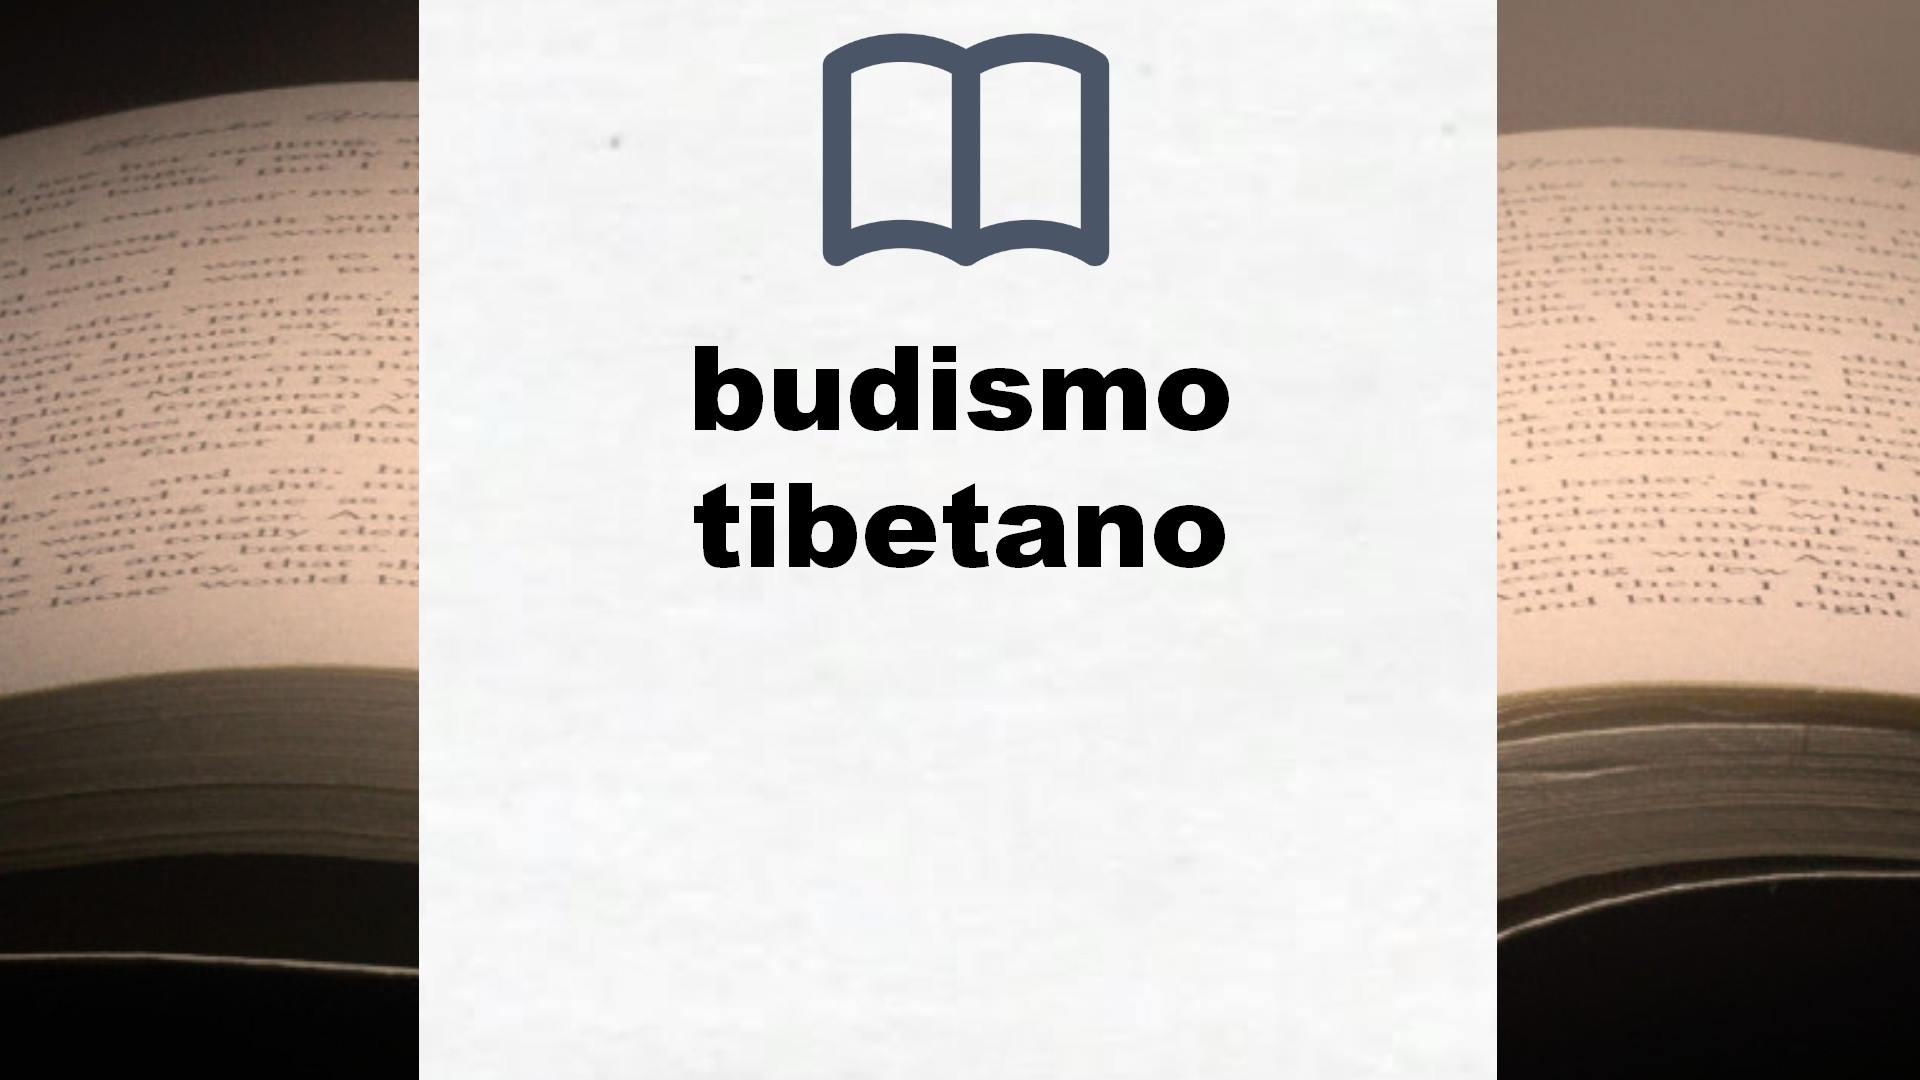 Libros sobre budismo tibetano